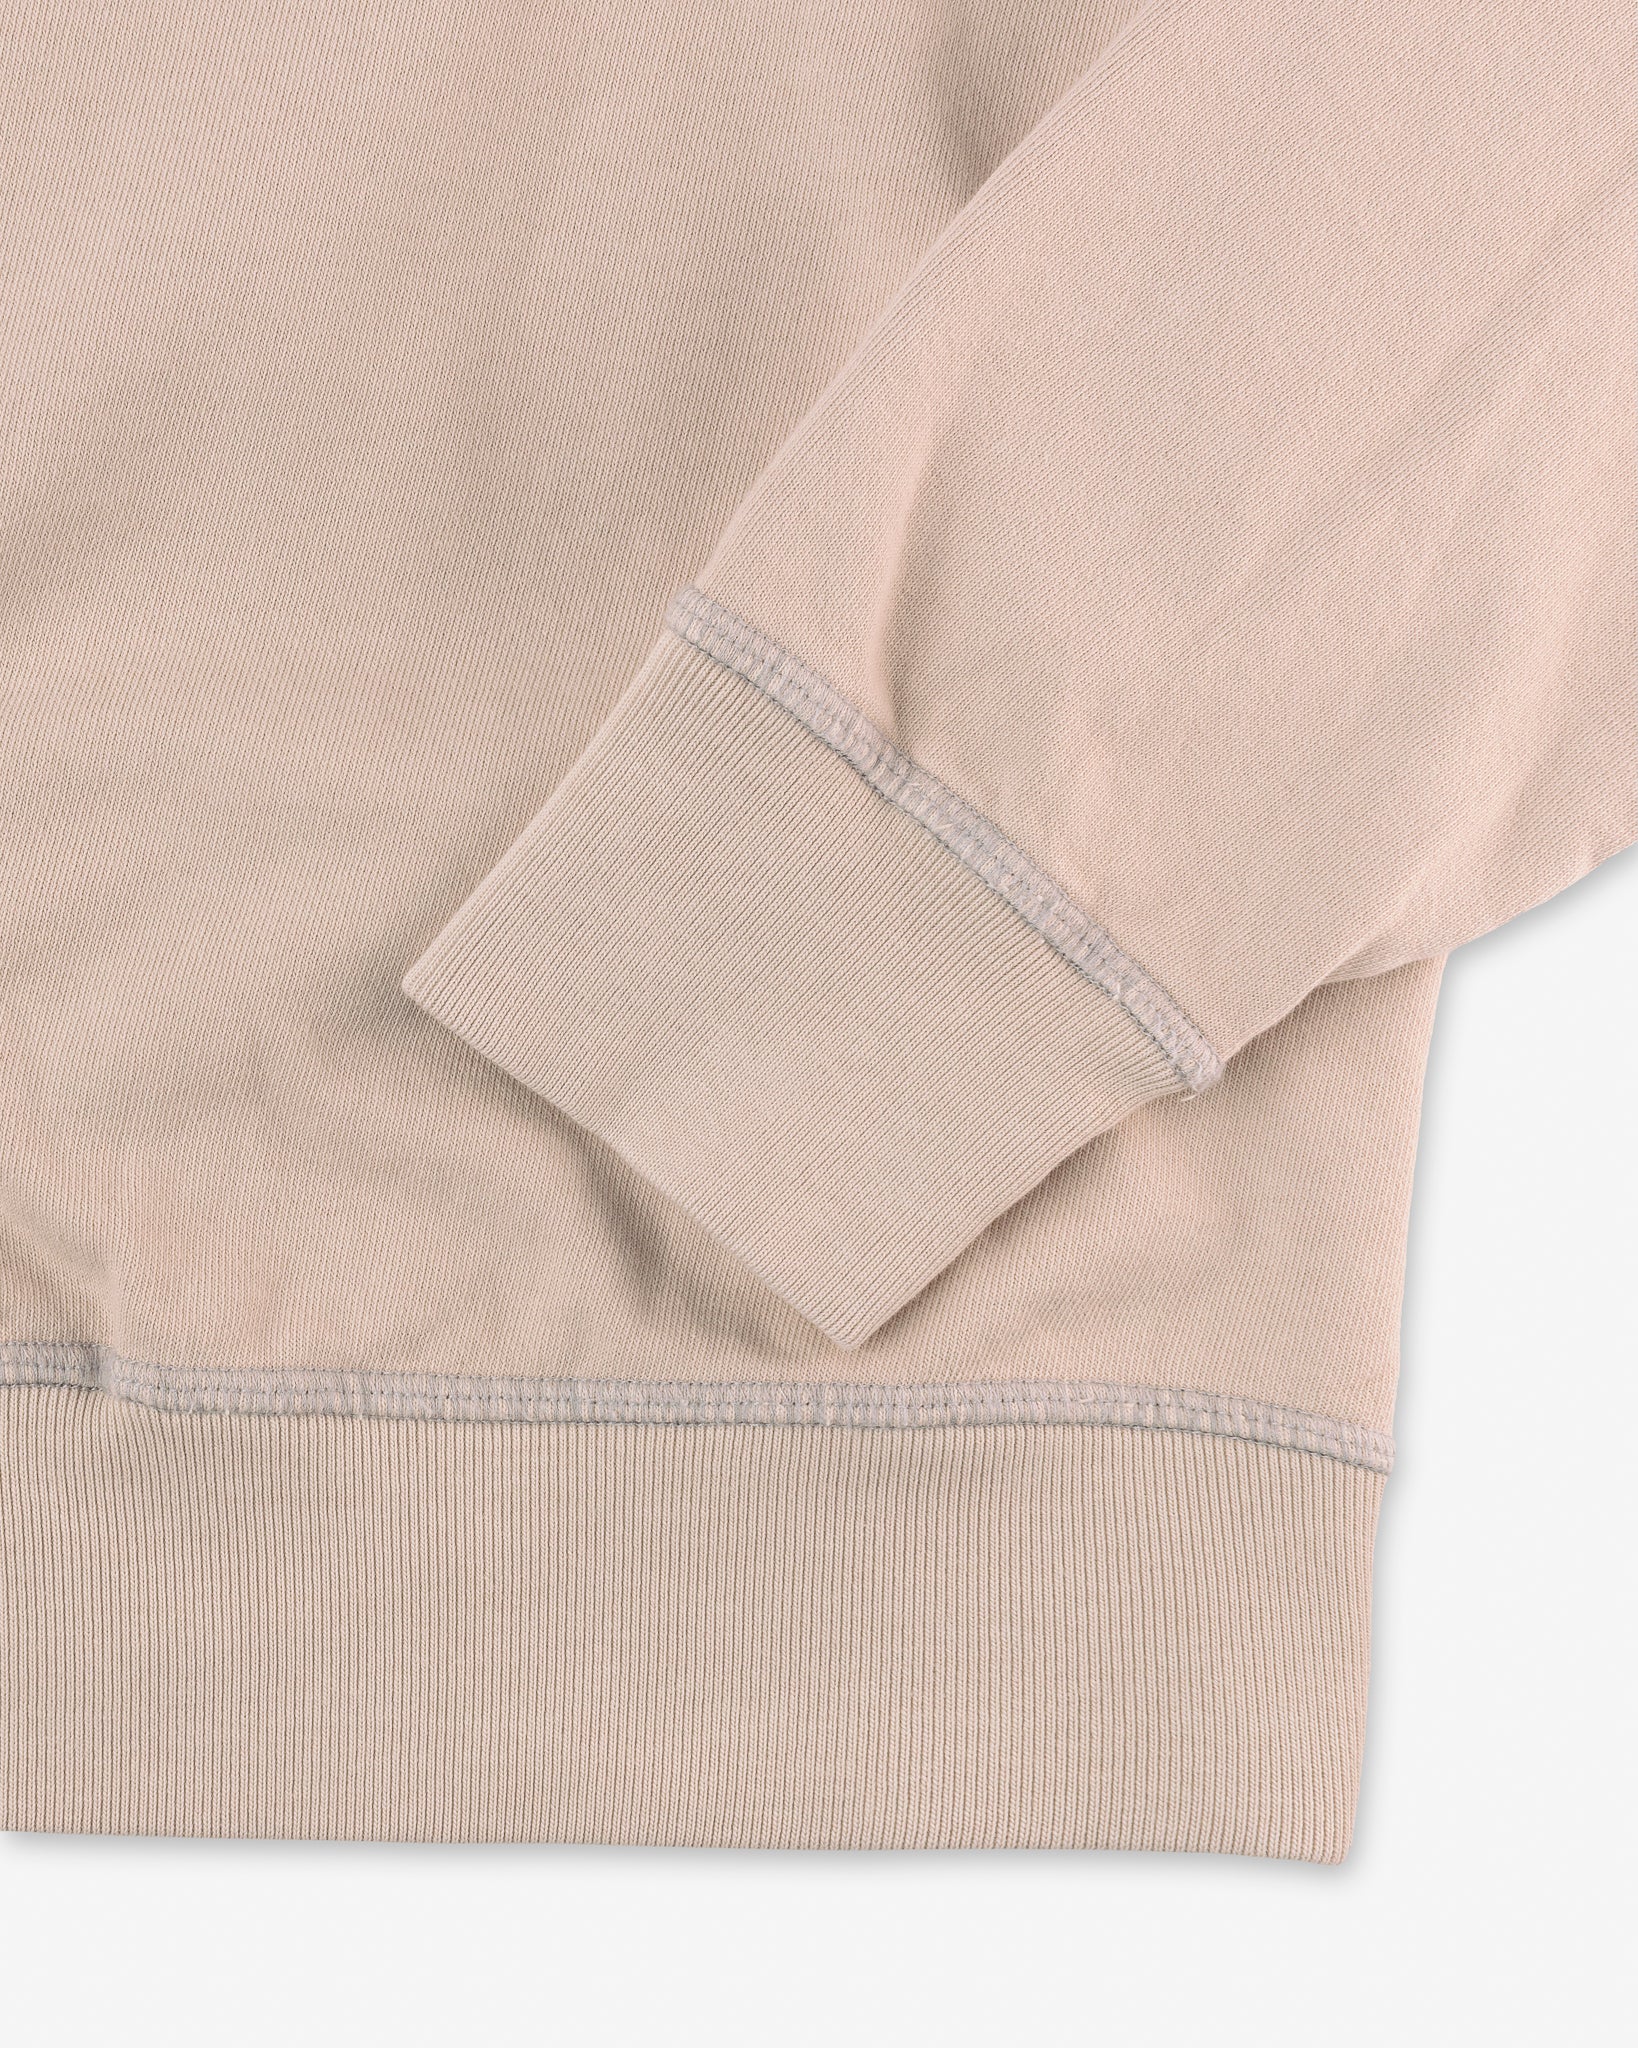 left sleeve set near bottom hem of organic cotton sweatshirt in light khaki